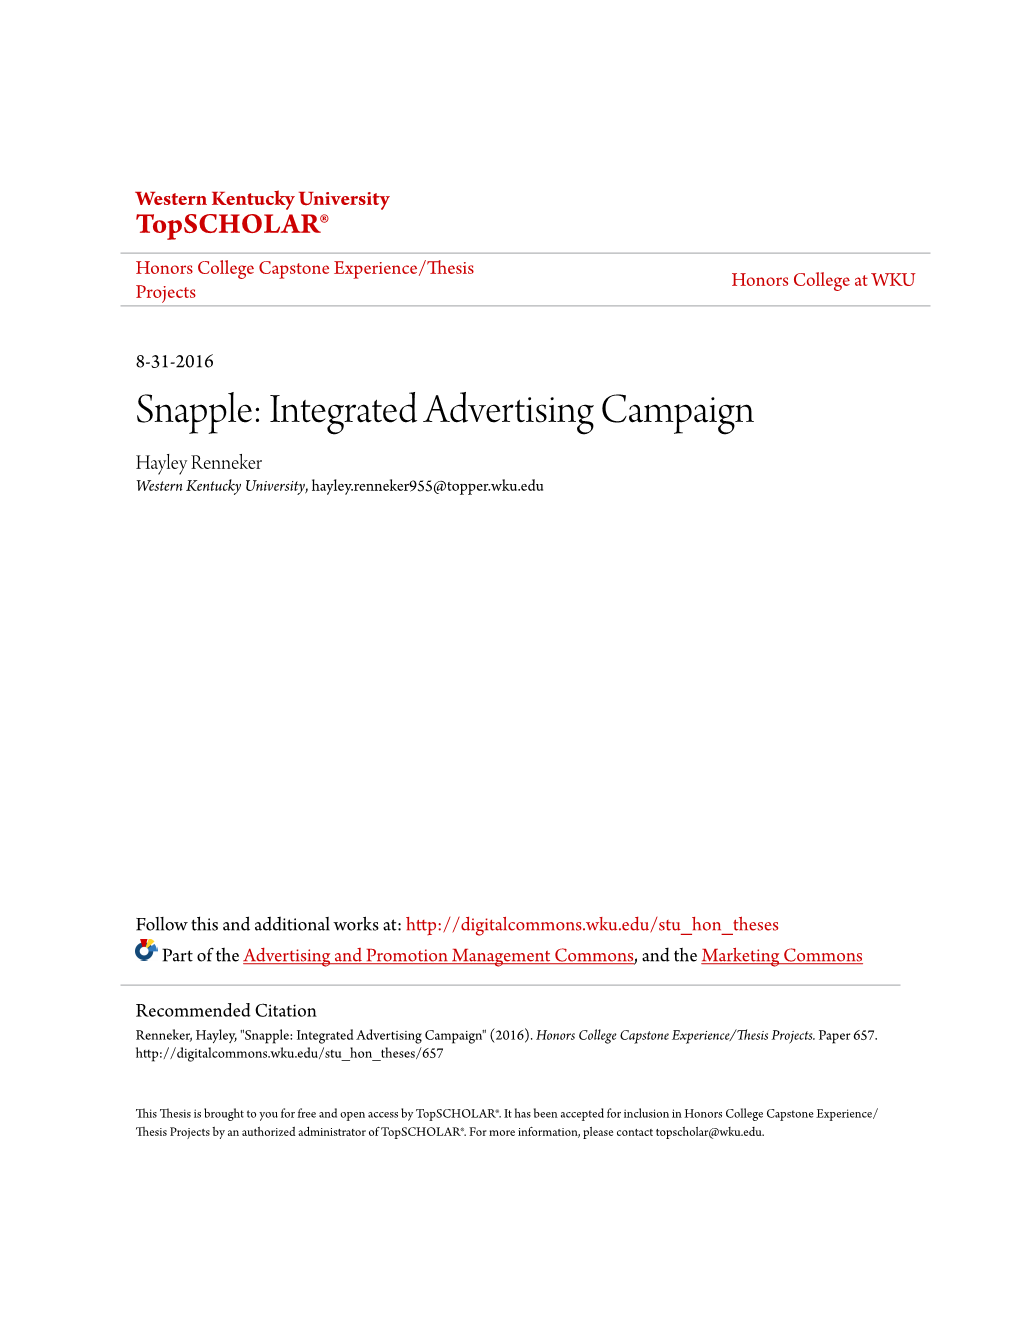 Snapple: Integrated Advertising Campaign Hayley Renneker Western Kentucky University, Hayley.Renneker955@Topper.Wku.Edu